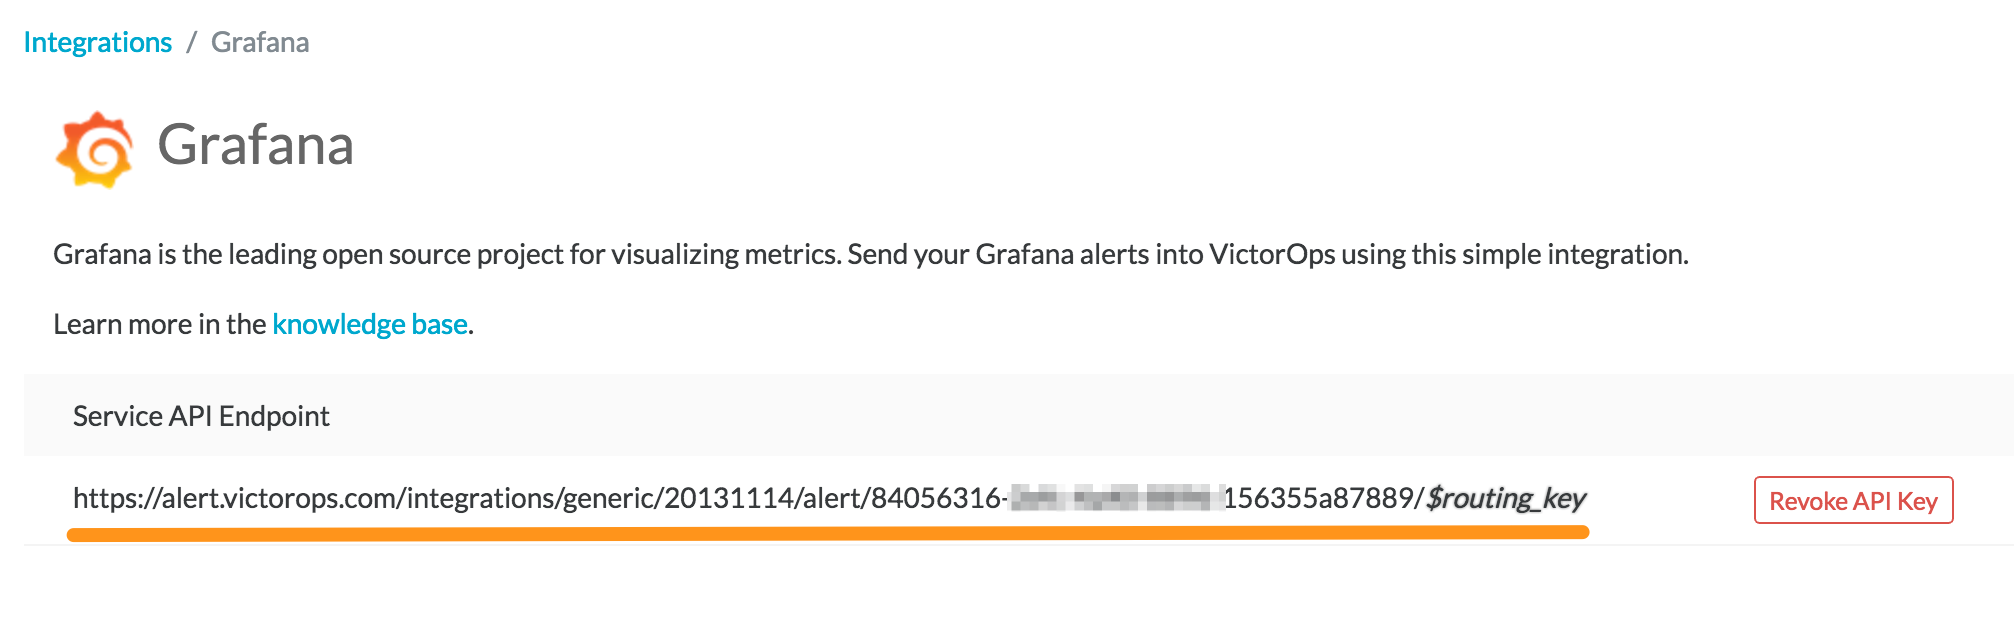 Copy service api endpoint for Grafana - VictorOps